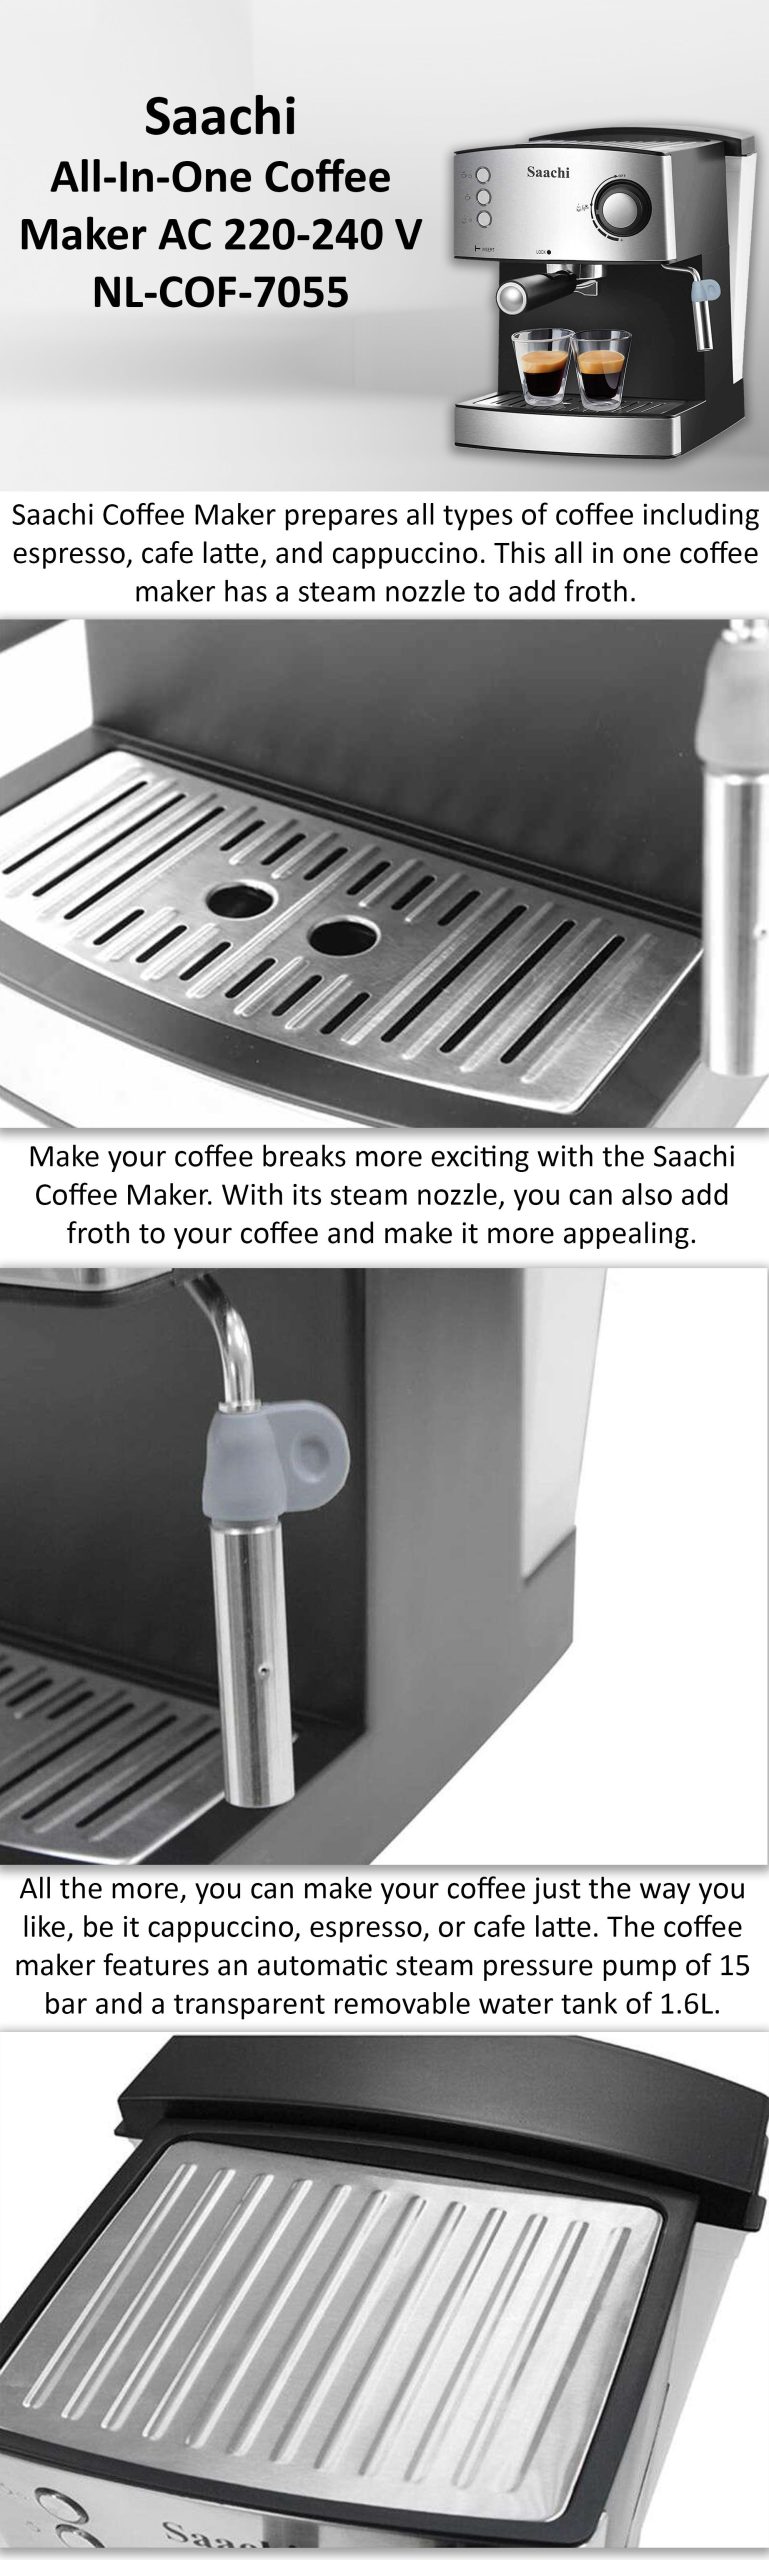 Saachi NL-COF-7055 | all-in-one coffee maker 